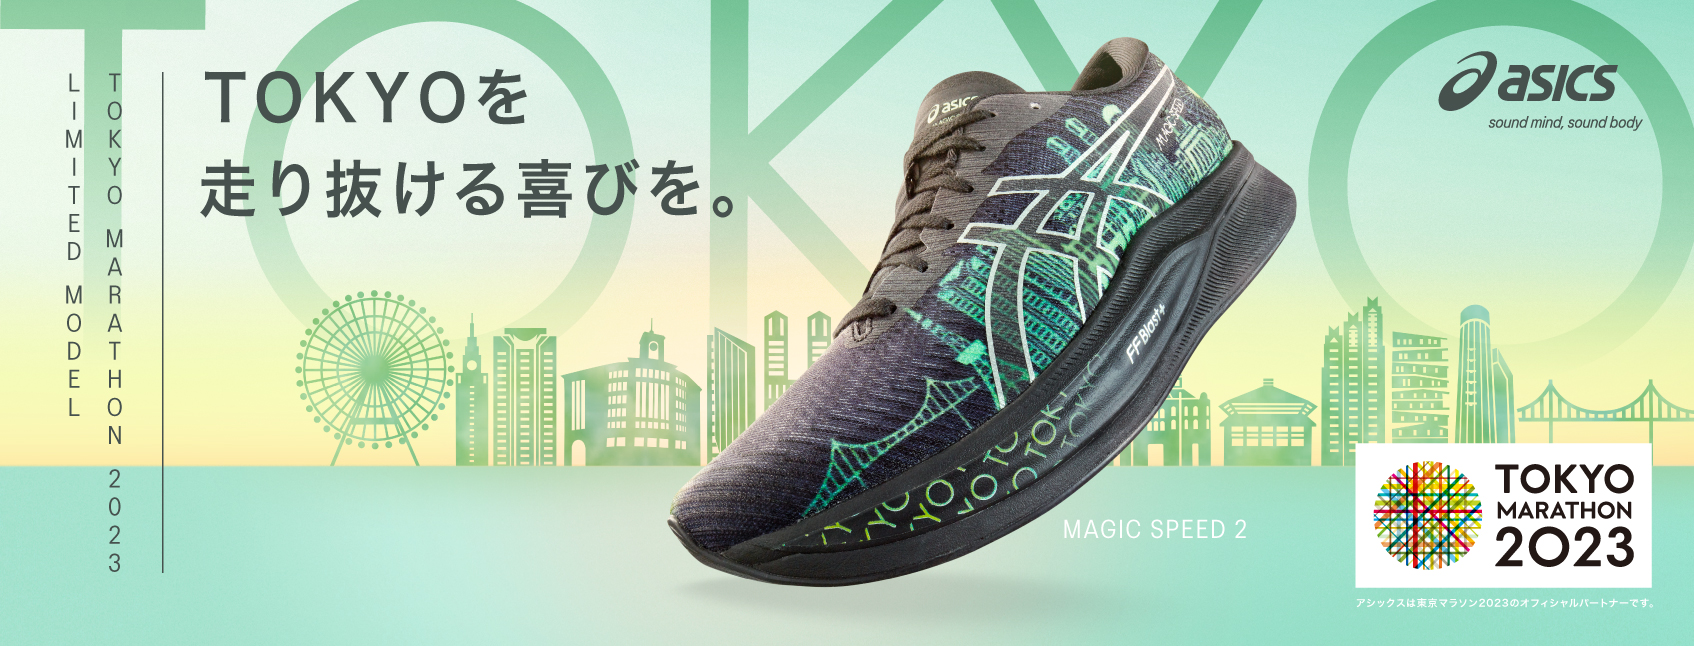 ASICS、「東京マラソン2023」開催を記念したランニングシューズ2タイプ